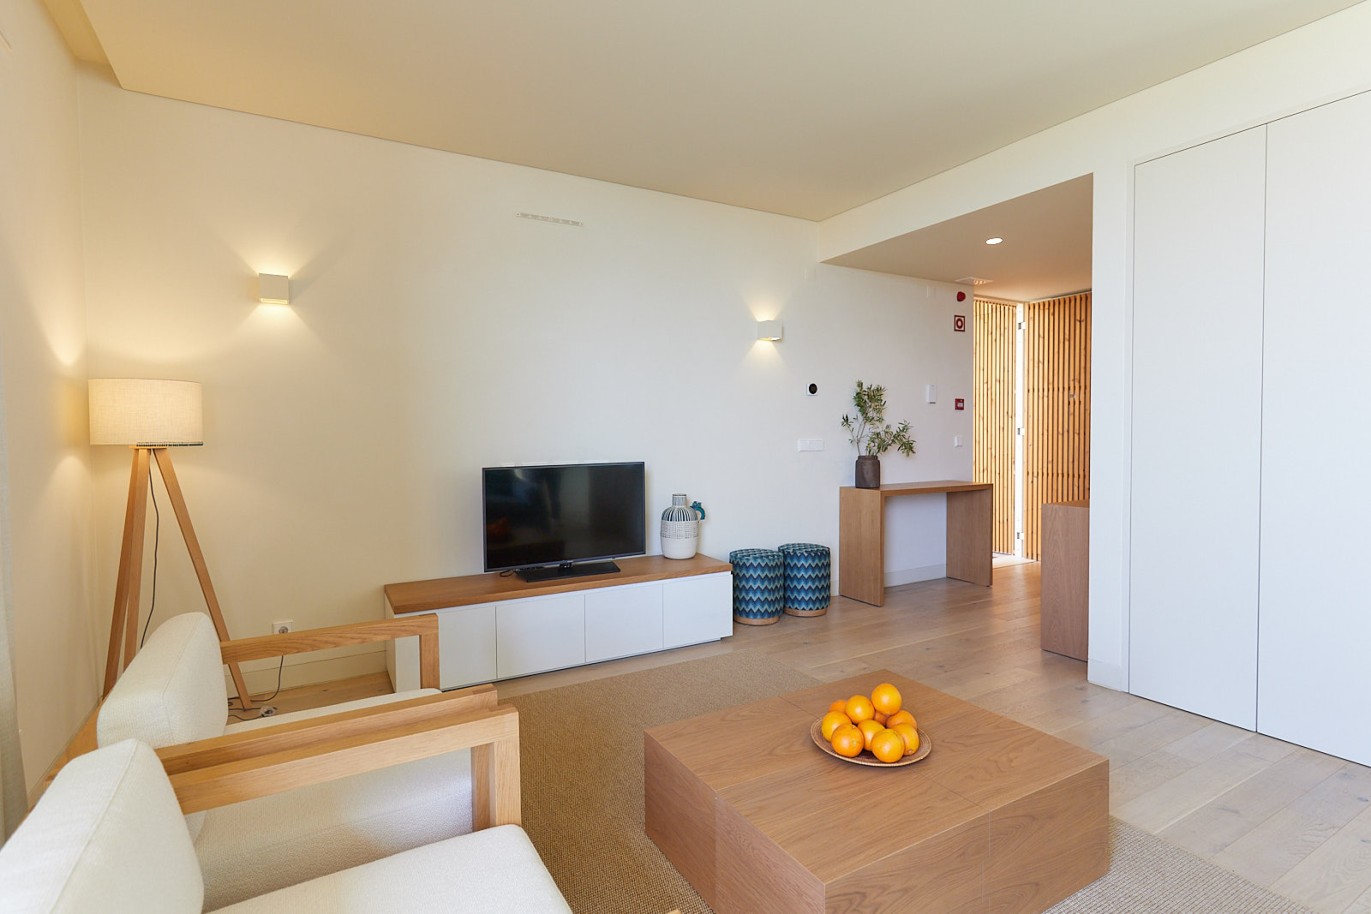 3 bedroom apartment in resort, for sale in Porches, Algarve_230722